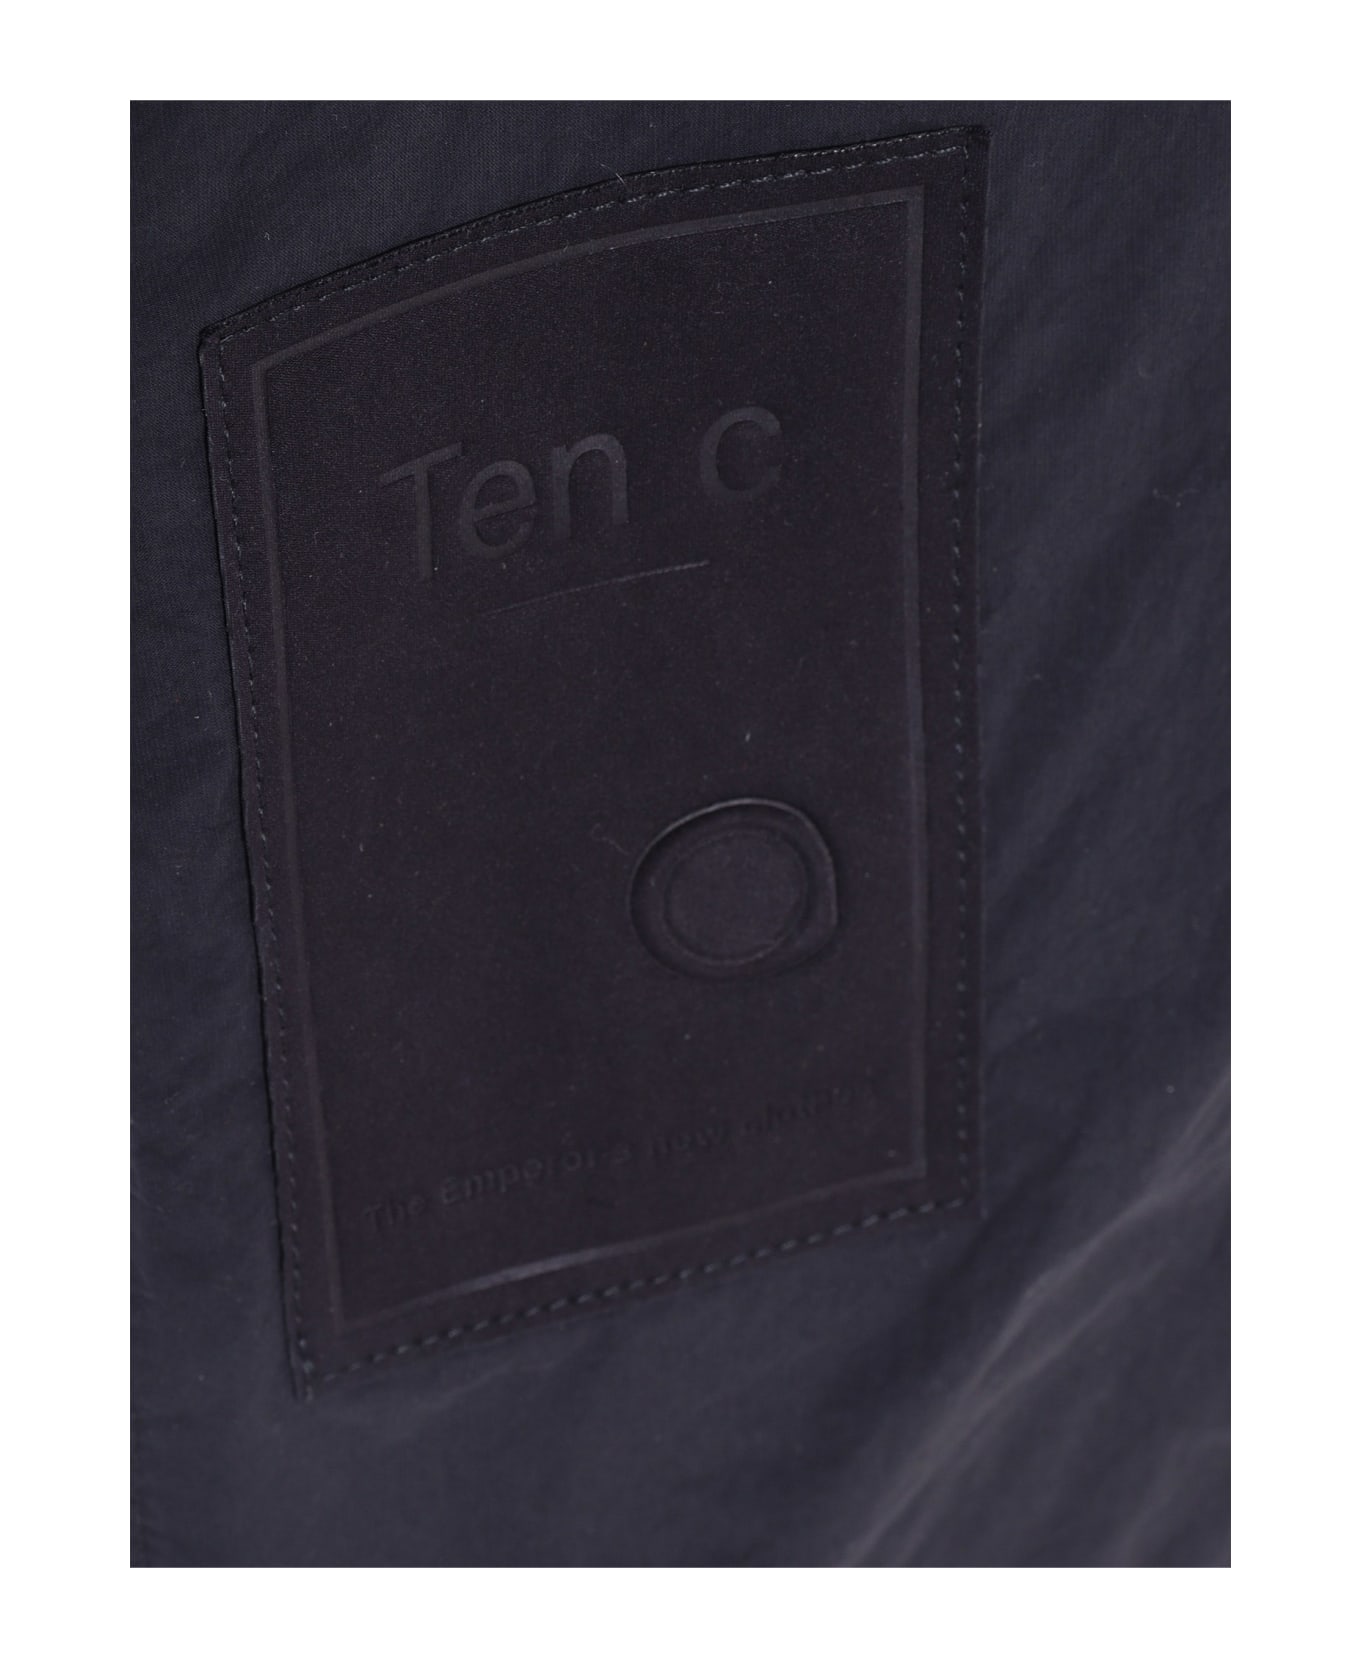 Ten C Blue Jacket - BLUE